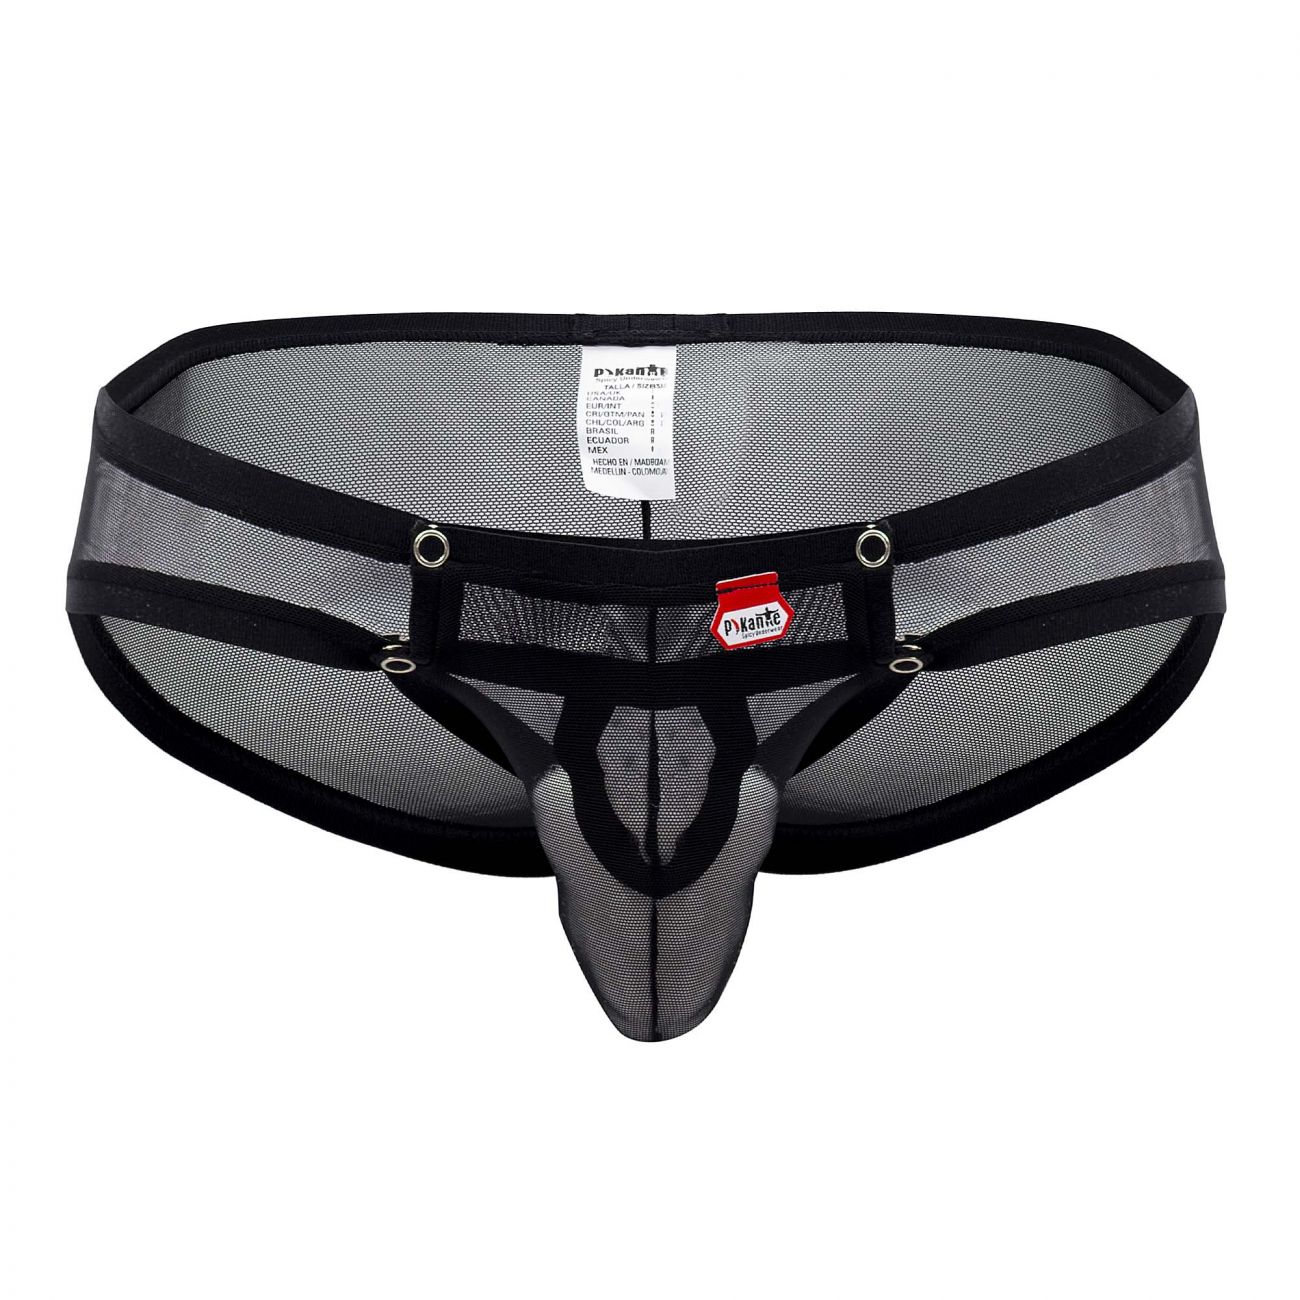 uitlaat Ijdelheid auditie Underwear: Pikante 0843 Womanizer Briefs | eBay